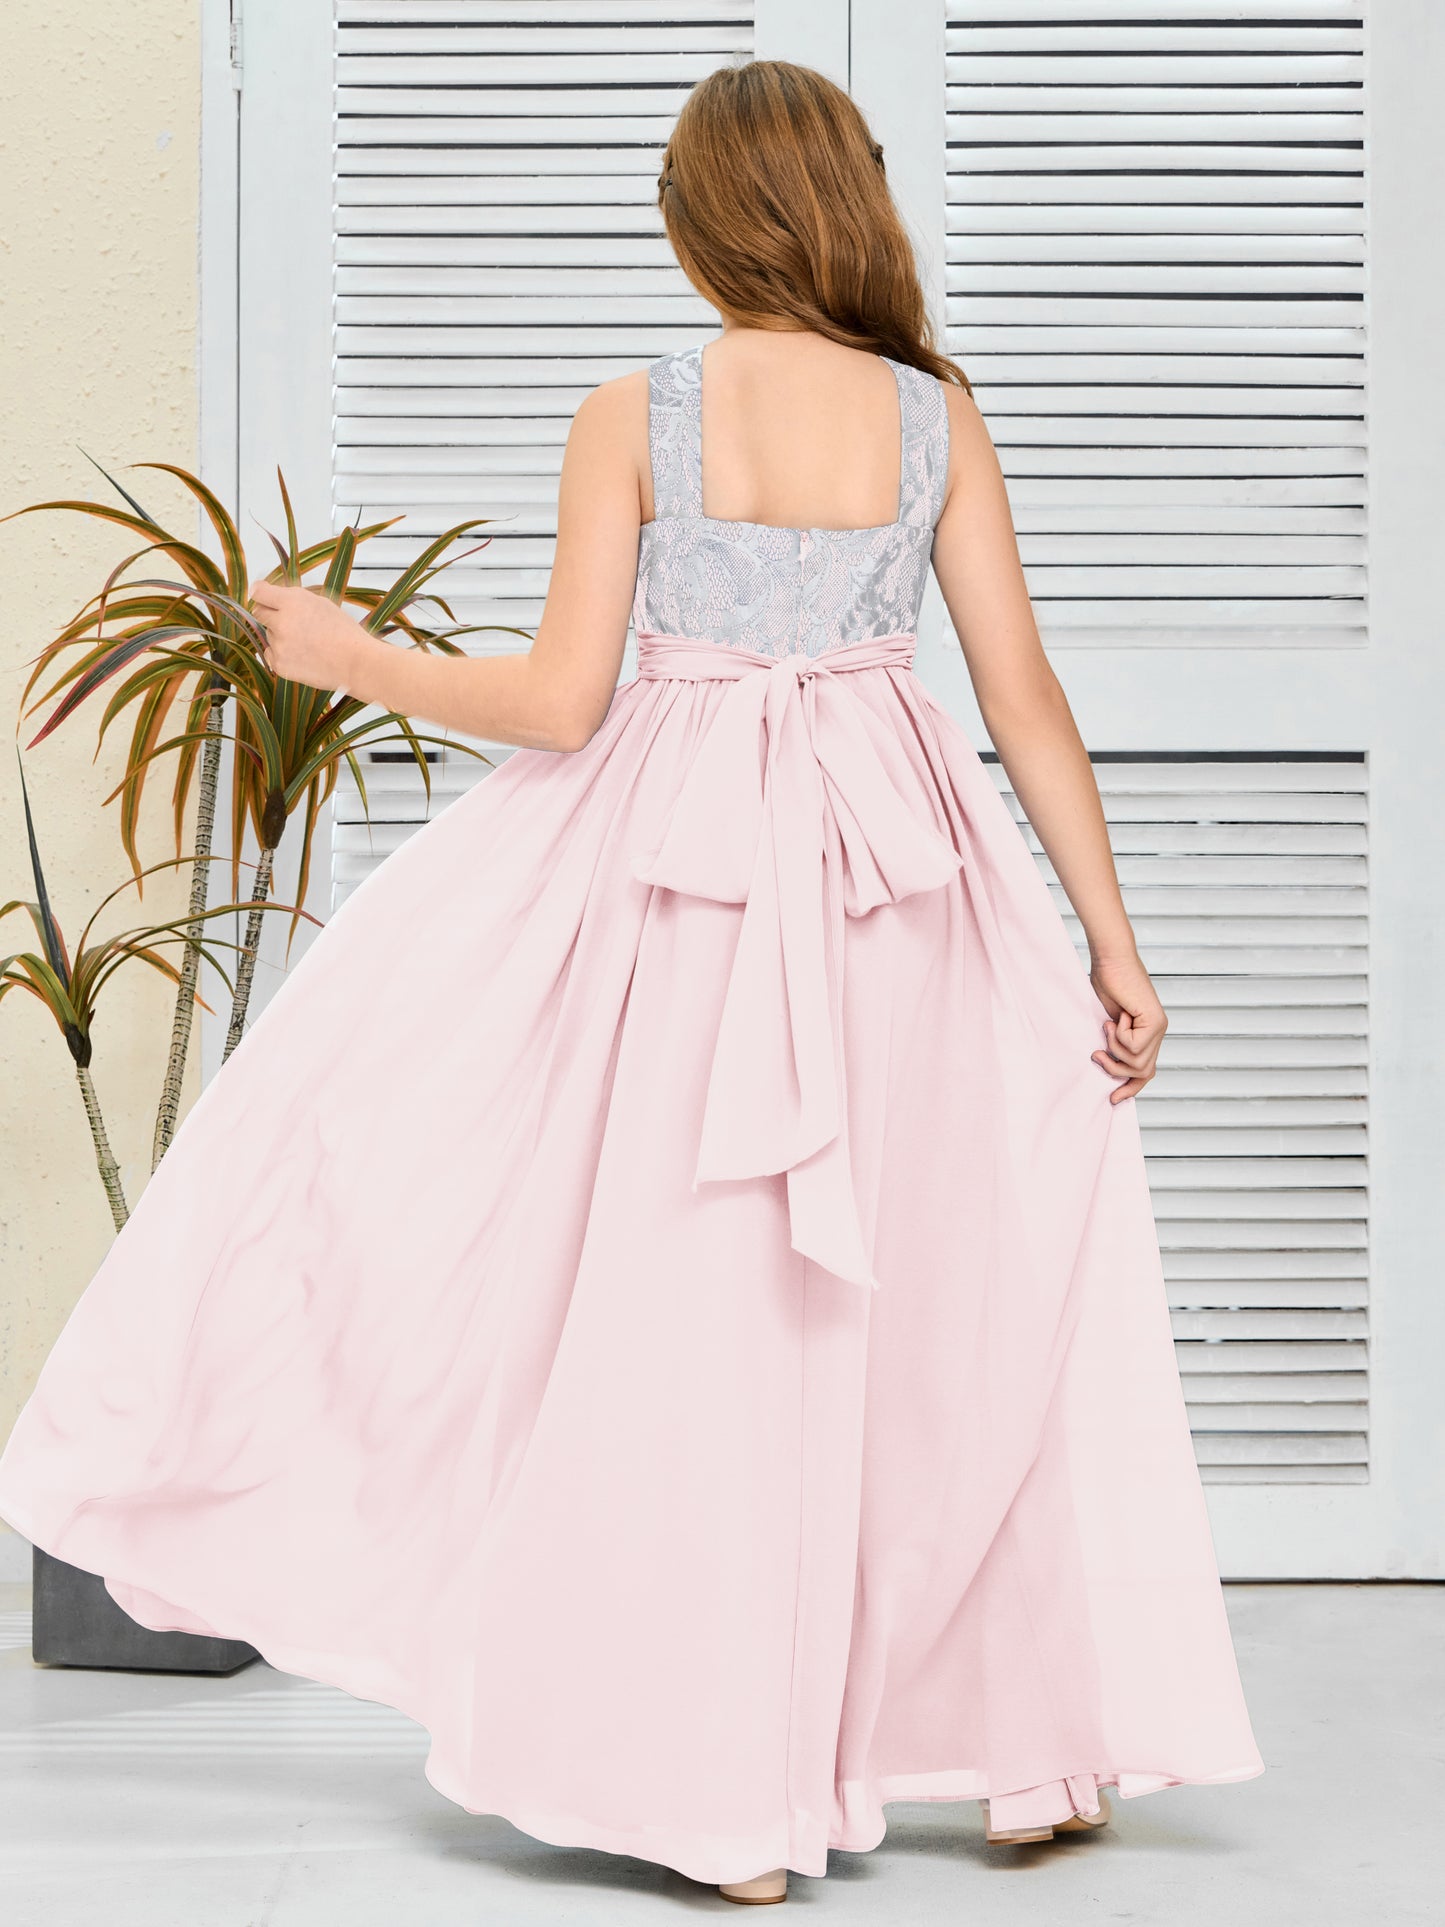 Lace Sleeveless Chiffon Junior Bridesmaid Dress With Belt